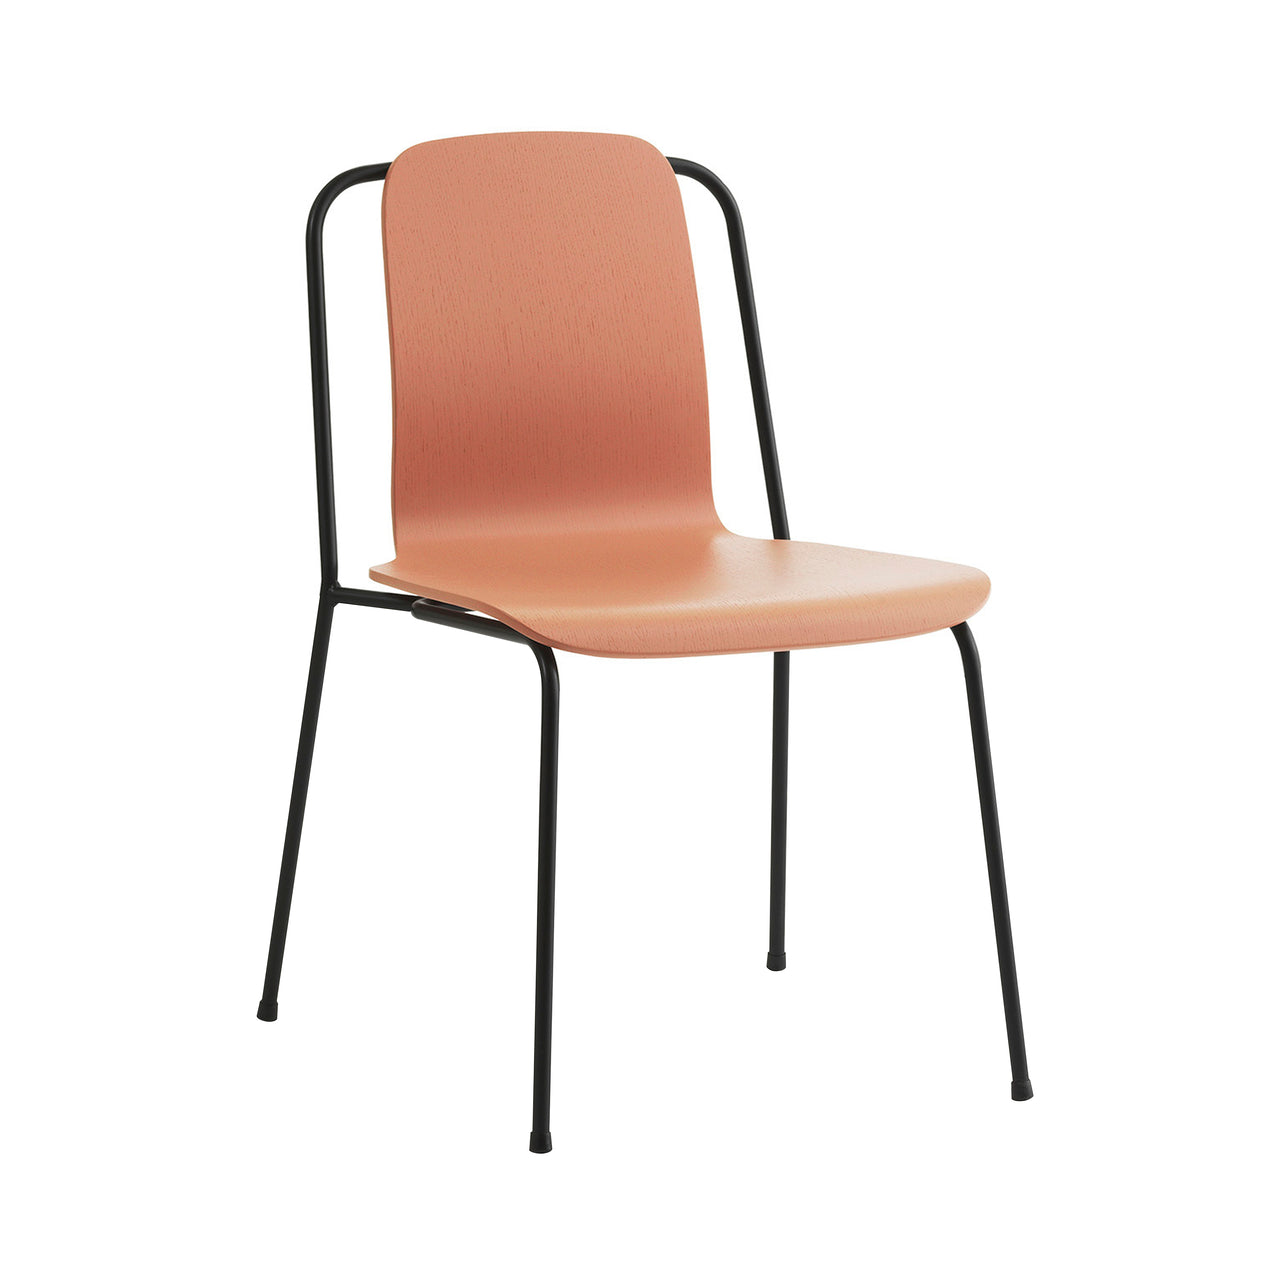 Studio Chair: Brown